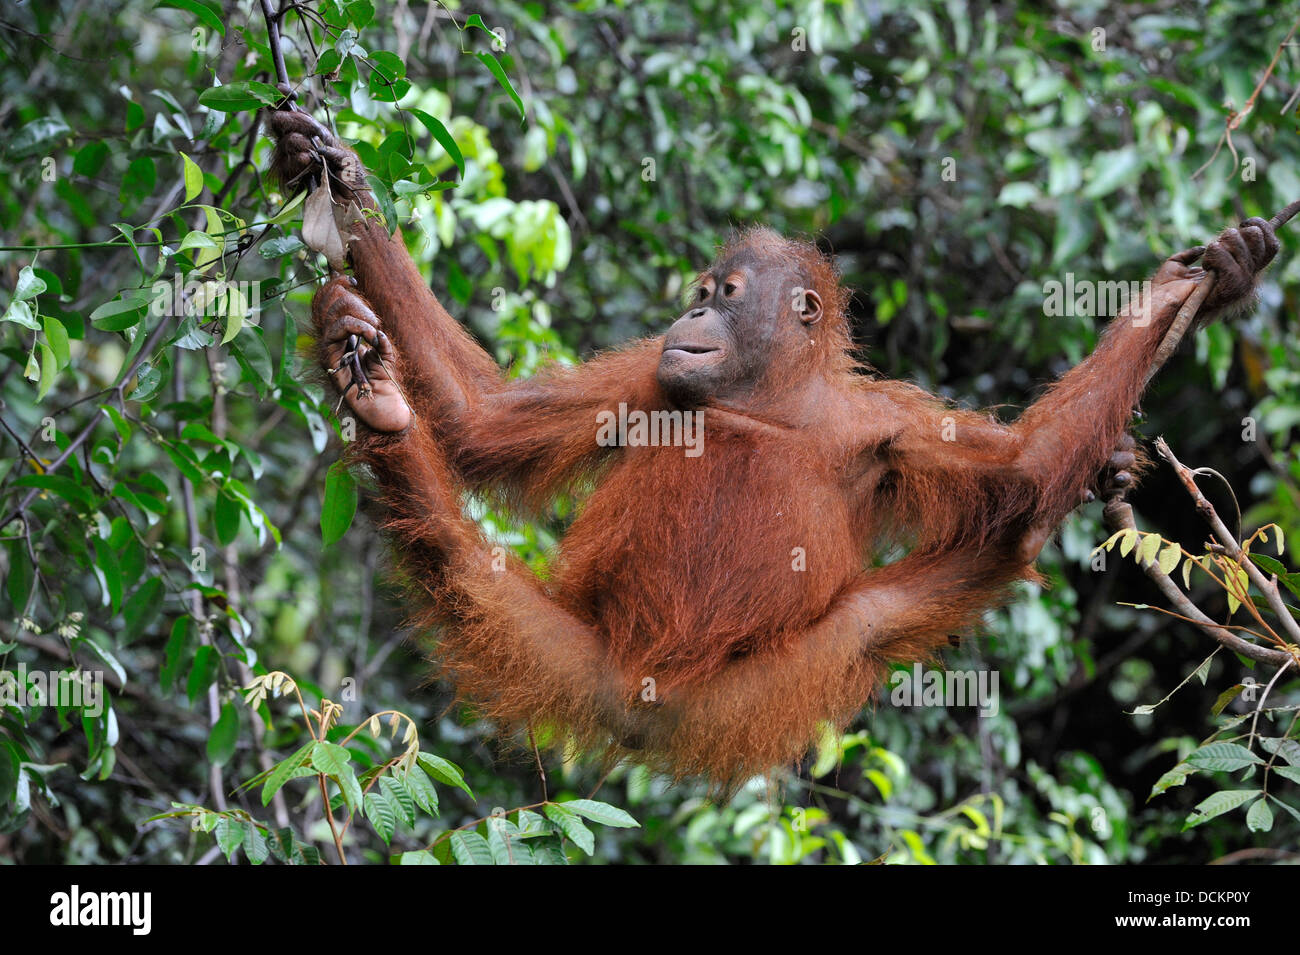 Orangután juvenil .Pongo pygmaeus Foto de stock